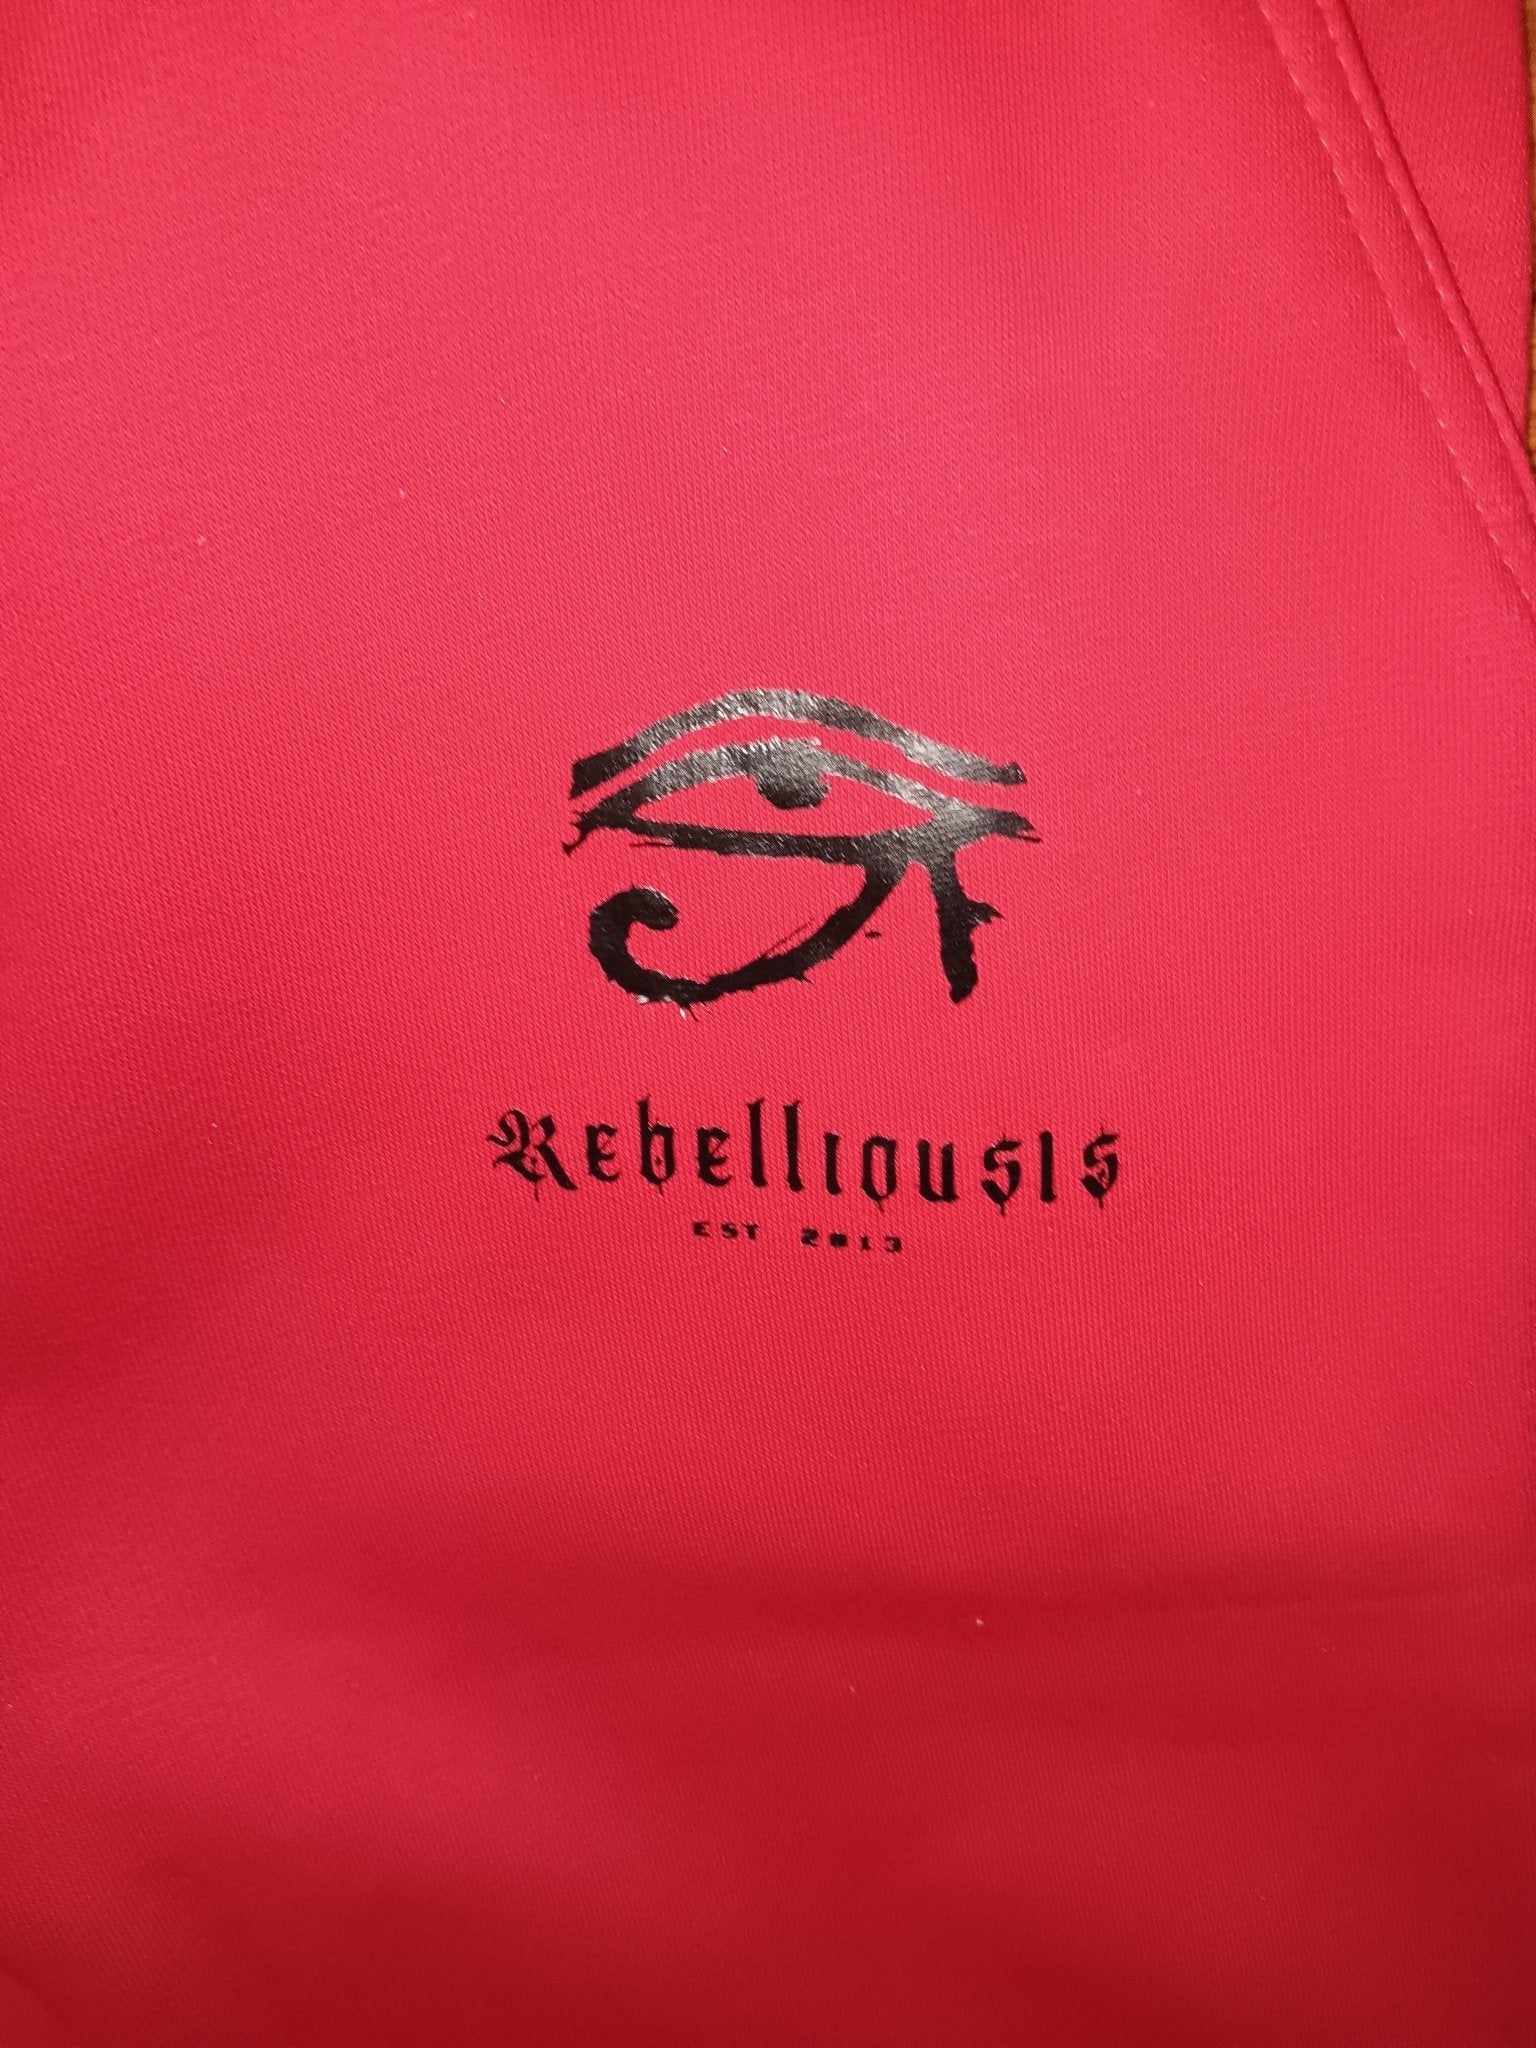 Eye of Ra Sweatsuit Set - REBELLIOUS1S